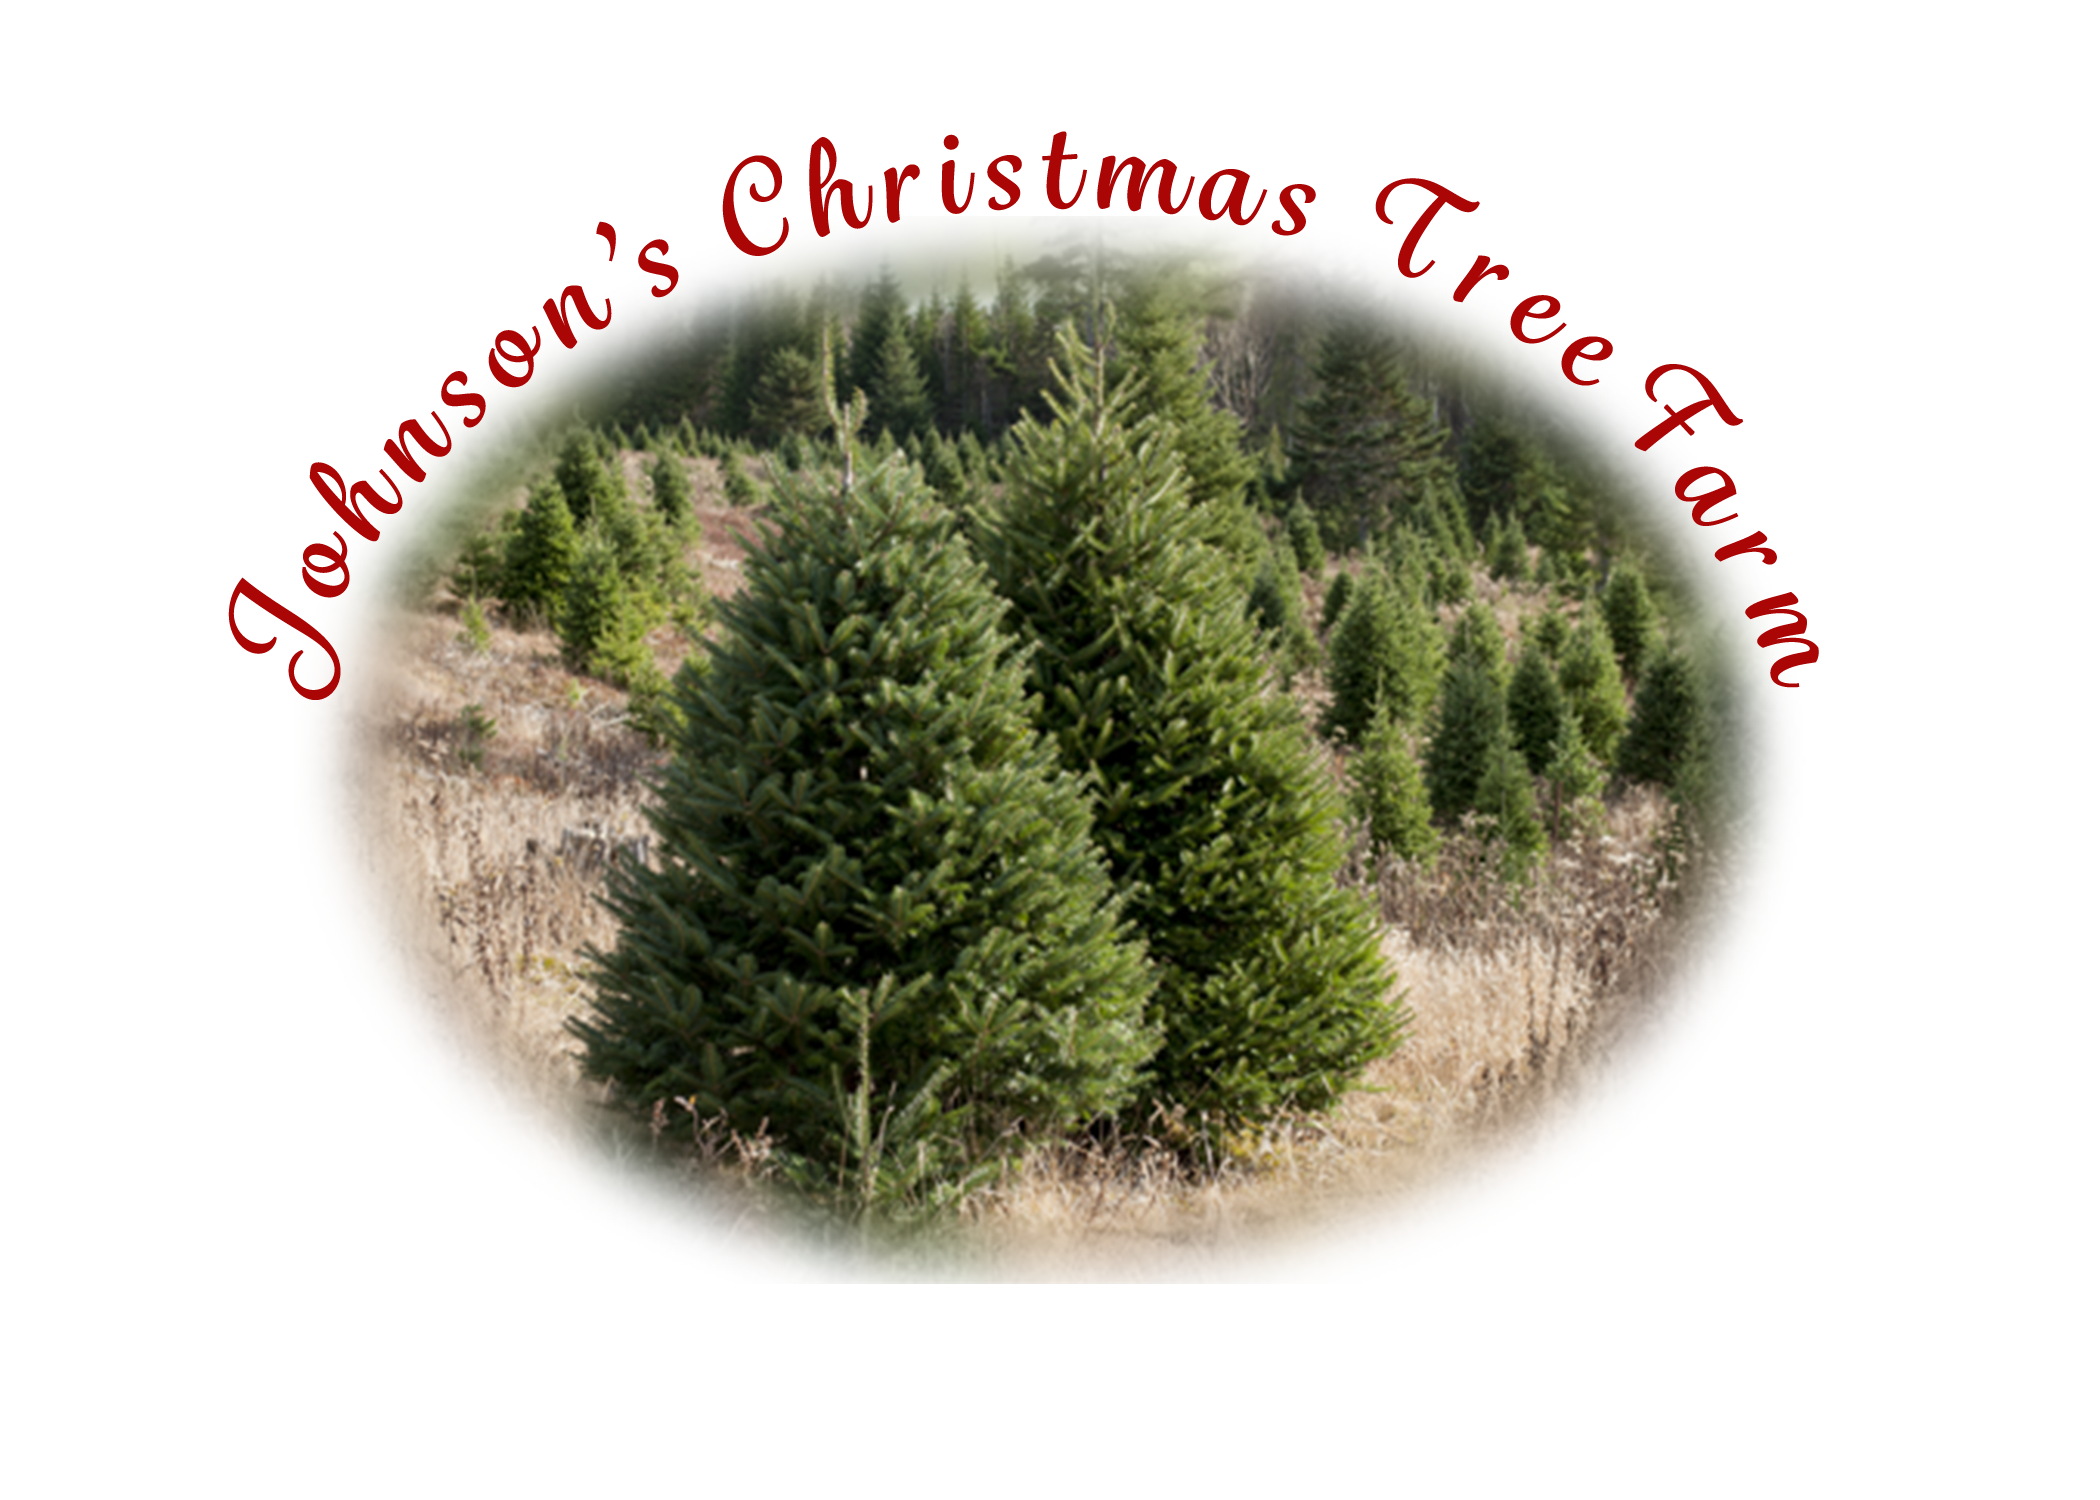 to Johnson's Christmas Tree Farm